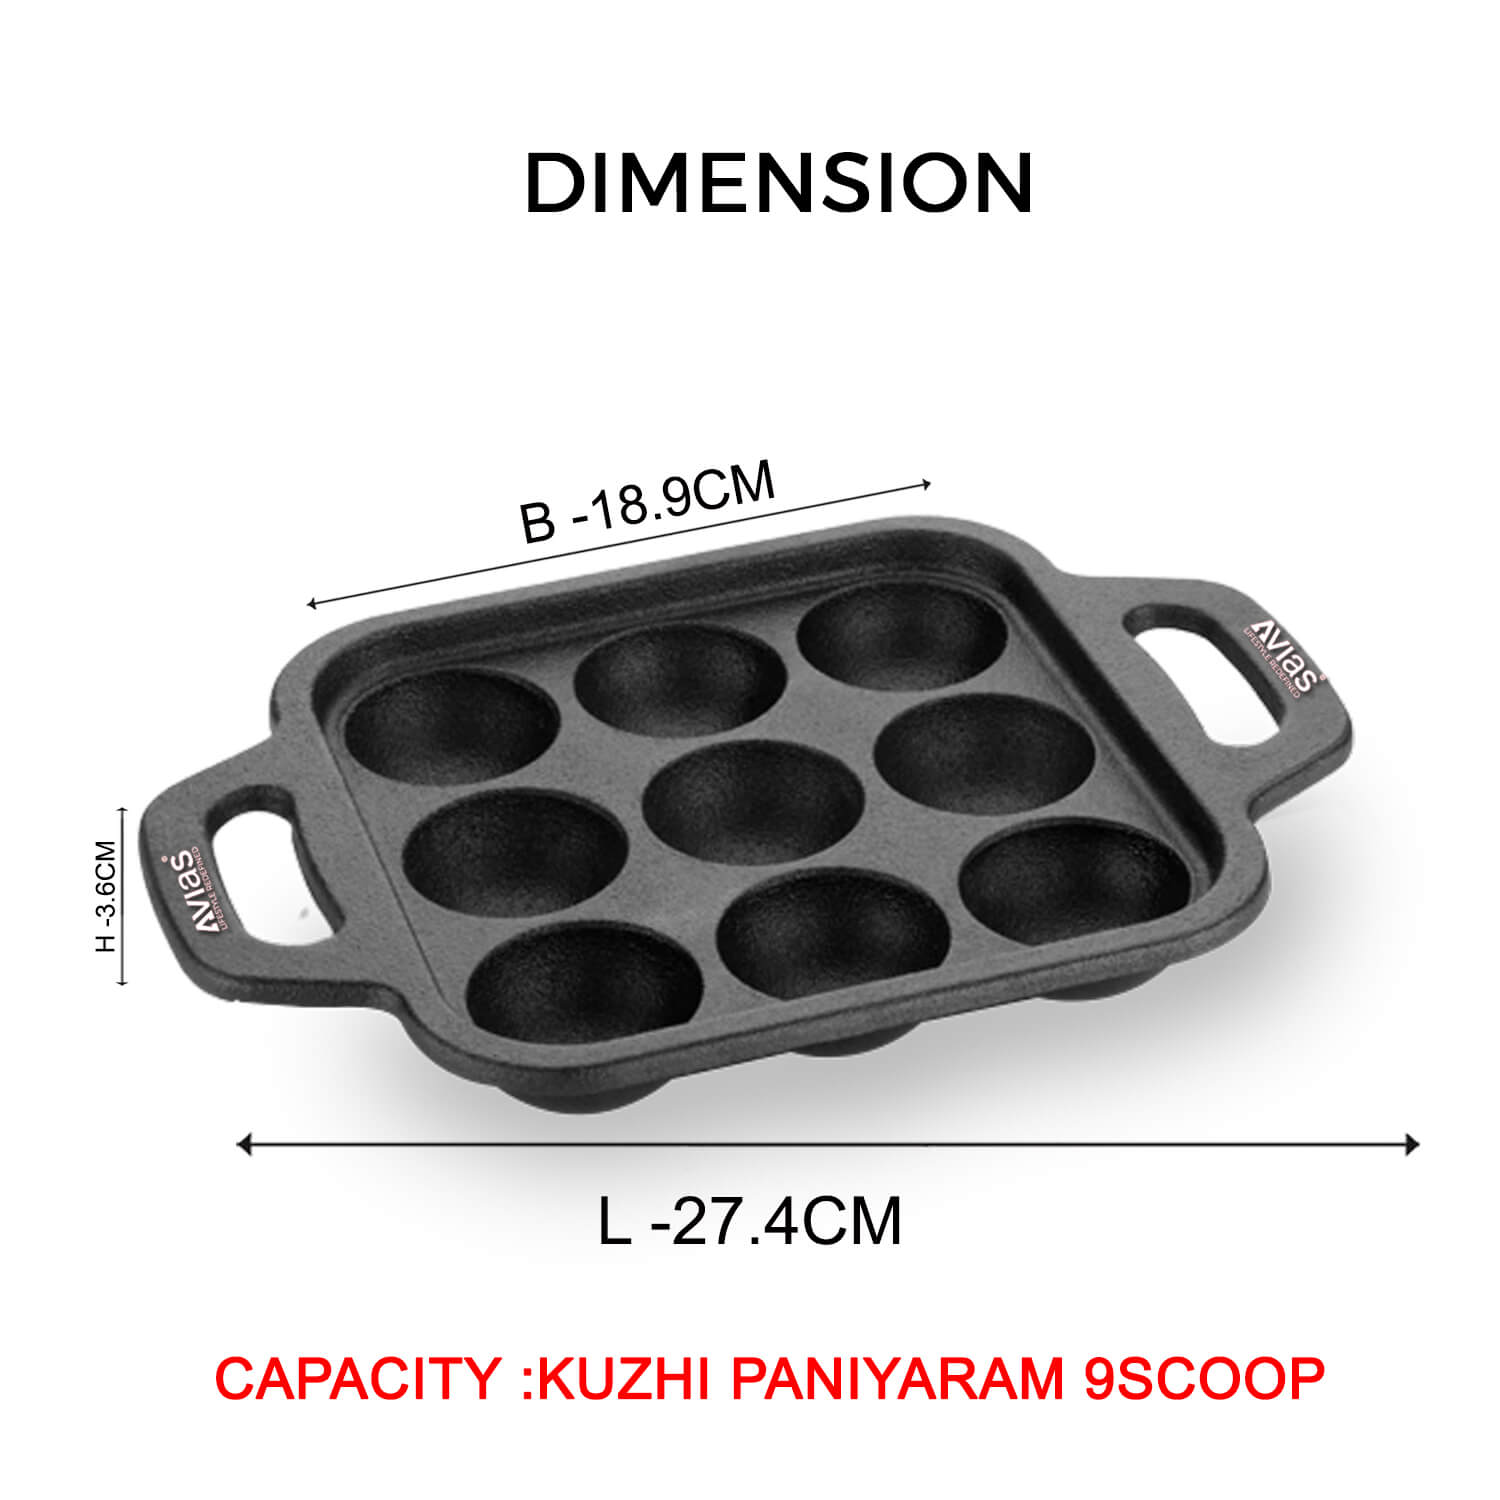 Cast Iron kuzhi Paniyaram pan/ kuzhi Paniyaram Kal/ Iron Paniyaram Pan dimension Pre-Seasoned Cookware